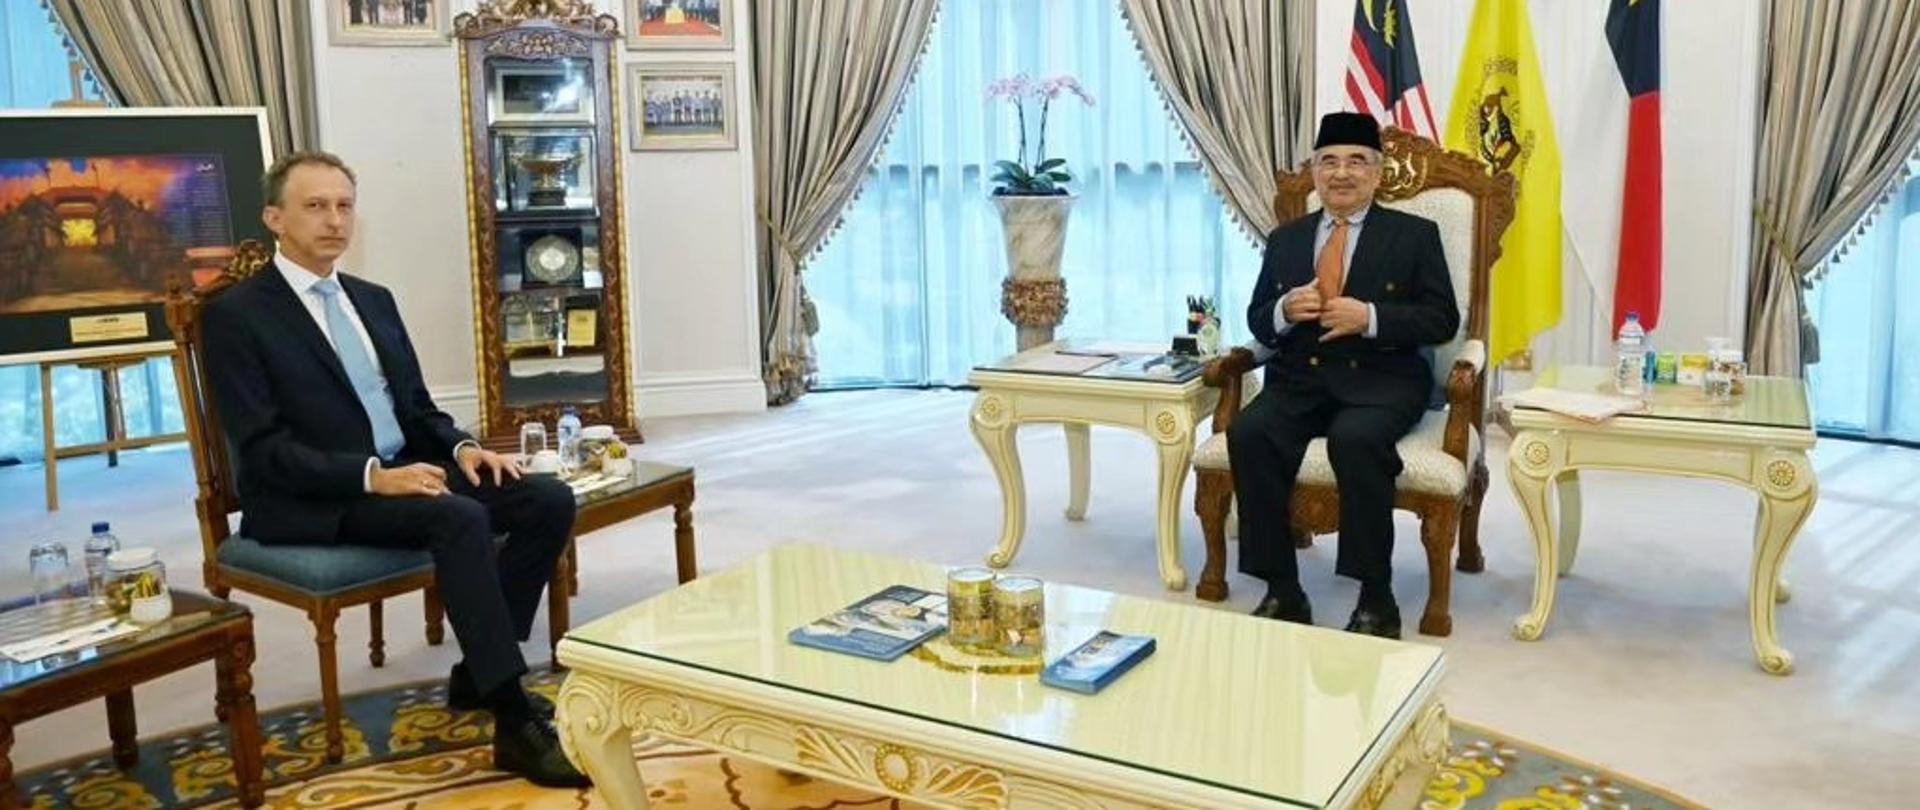 Courtesy visit of Ambassador Krzysztof Dobrowolski to the Governor of Malacca